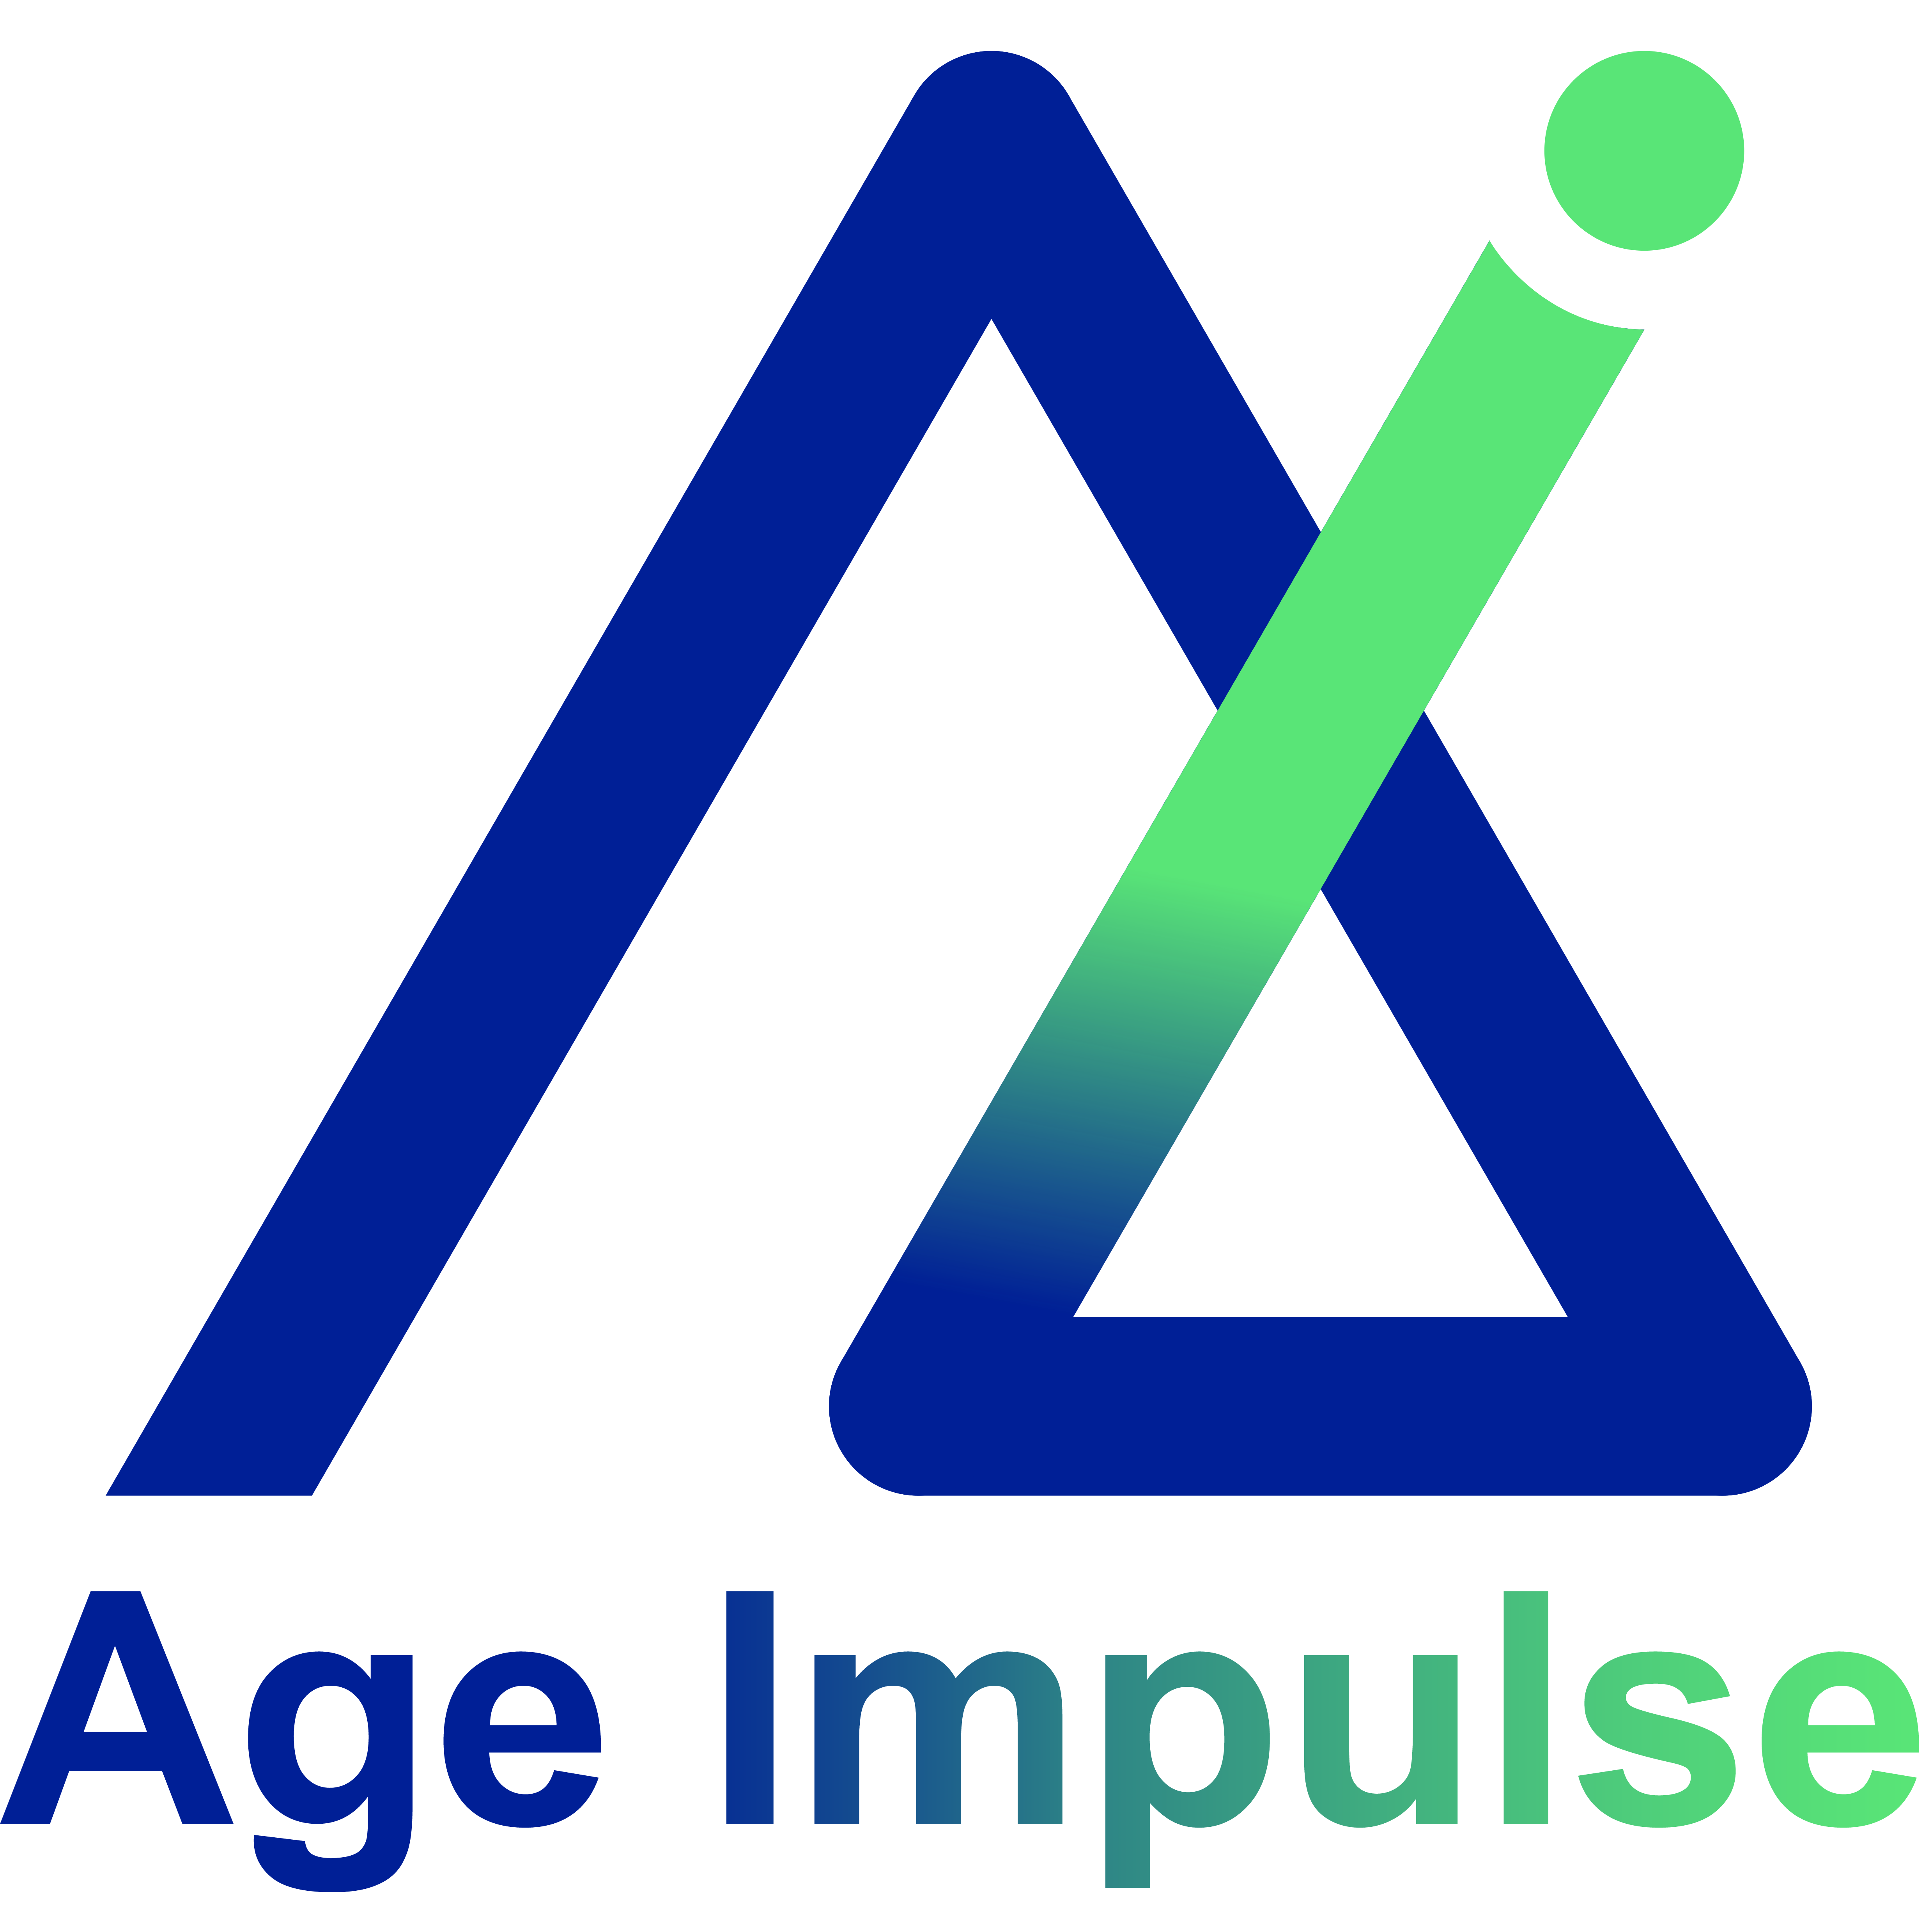 Age Impulse